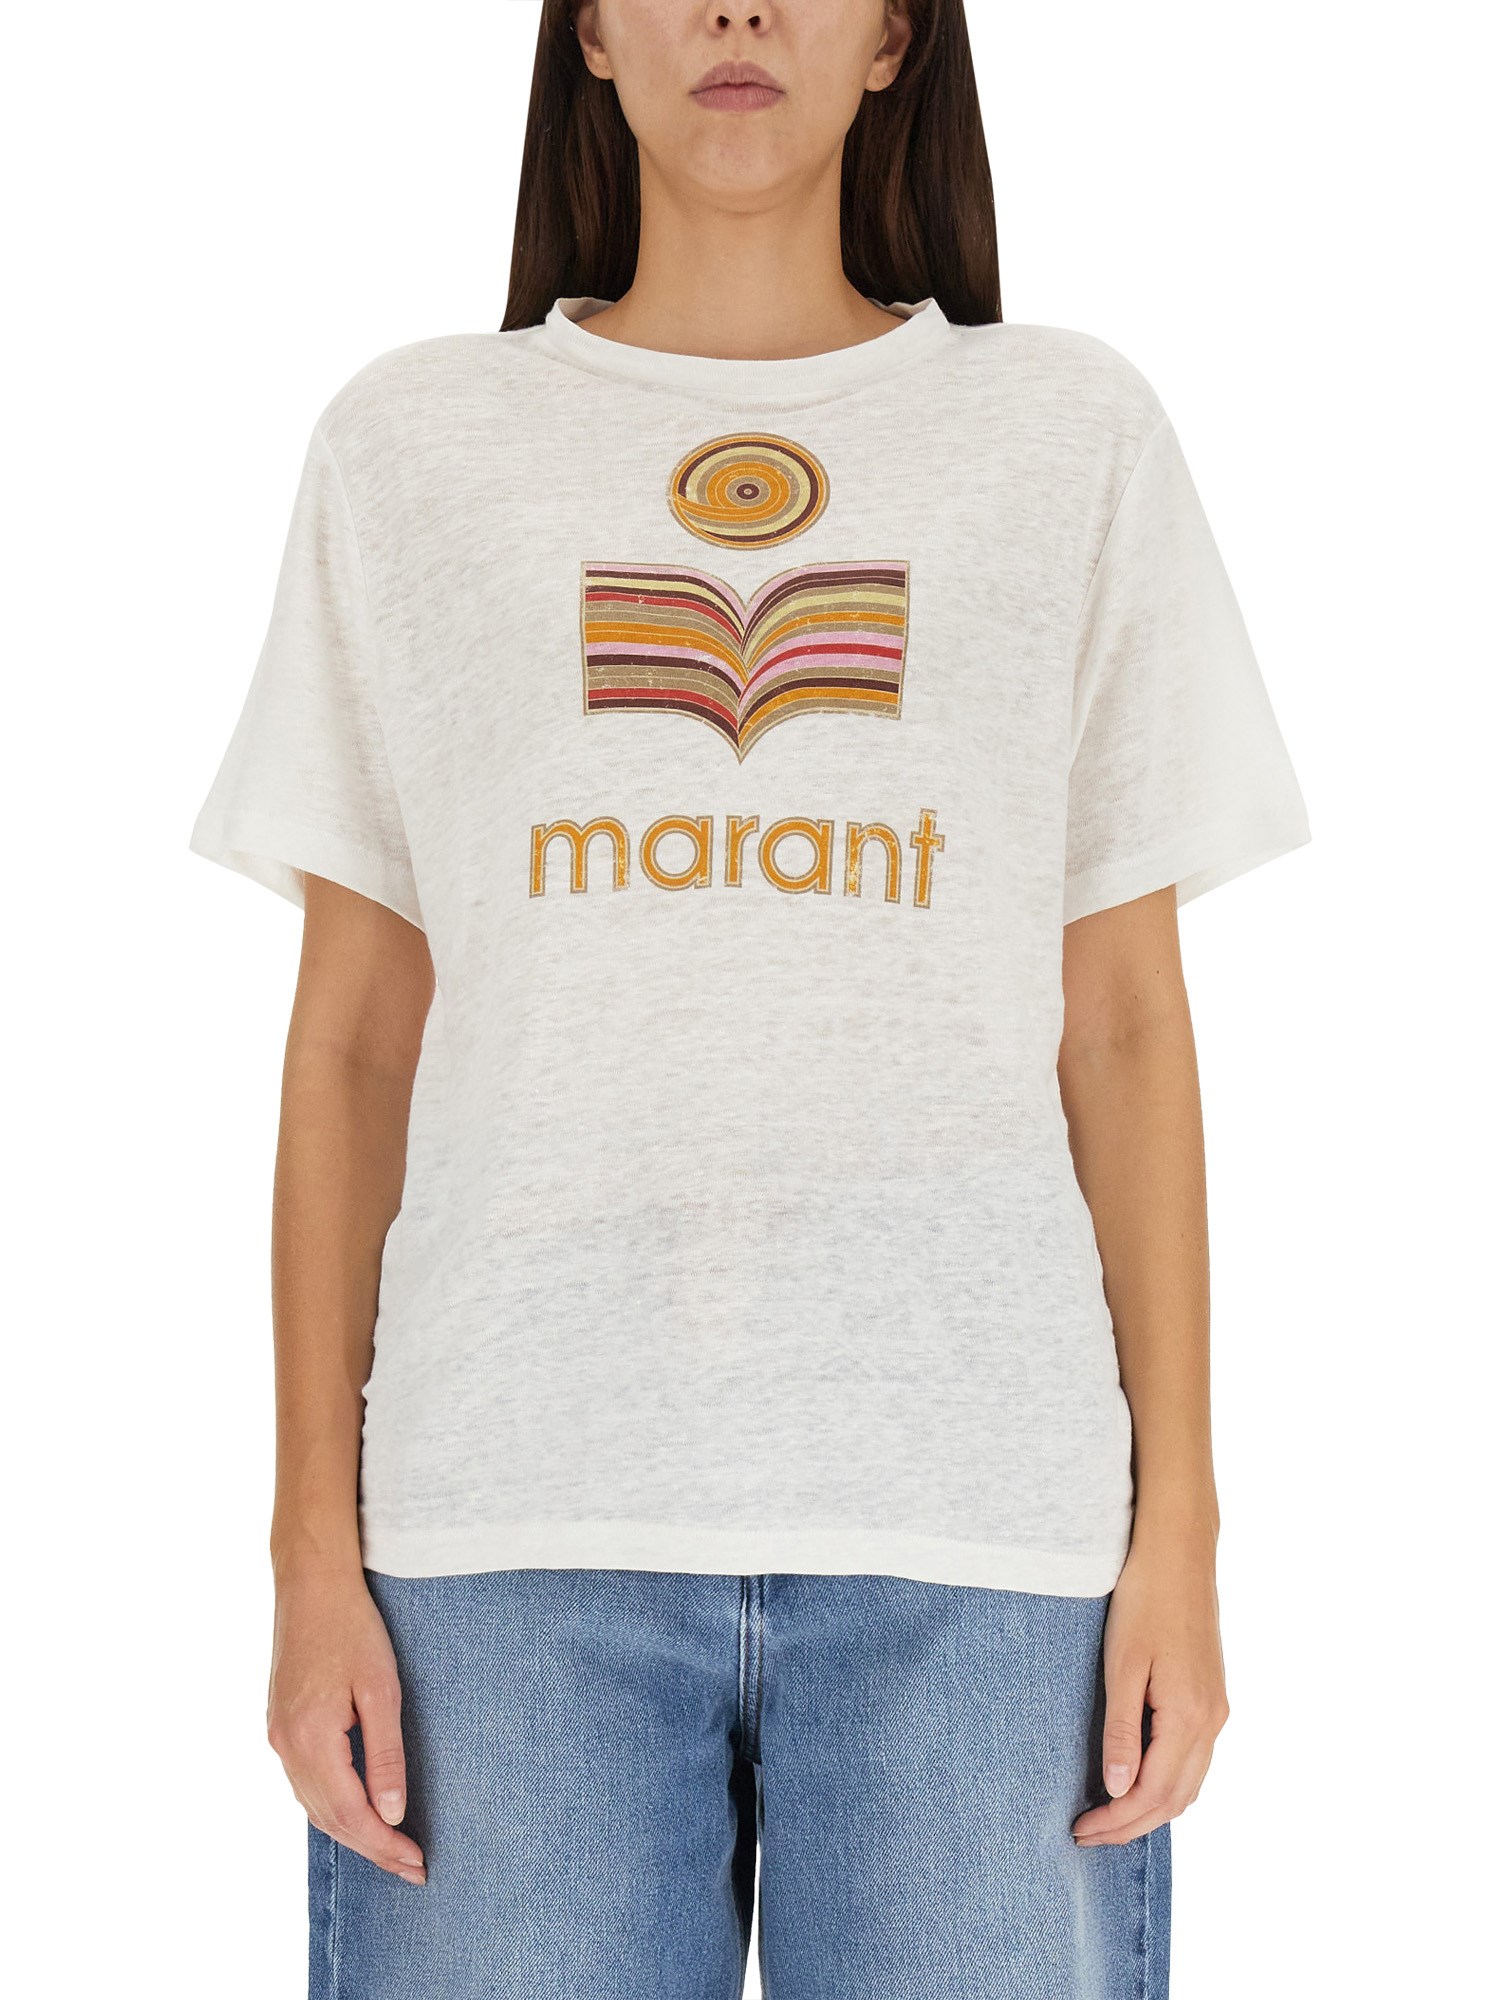 marant Ã©toile t-shirt zewel